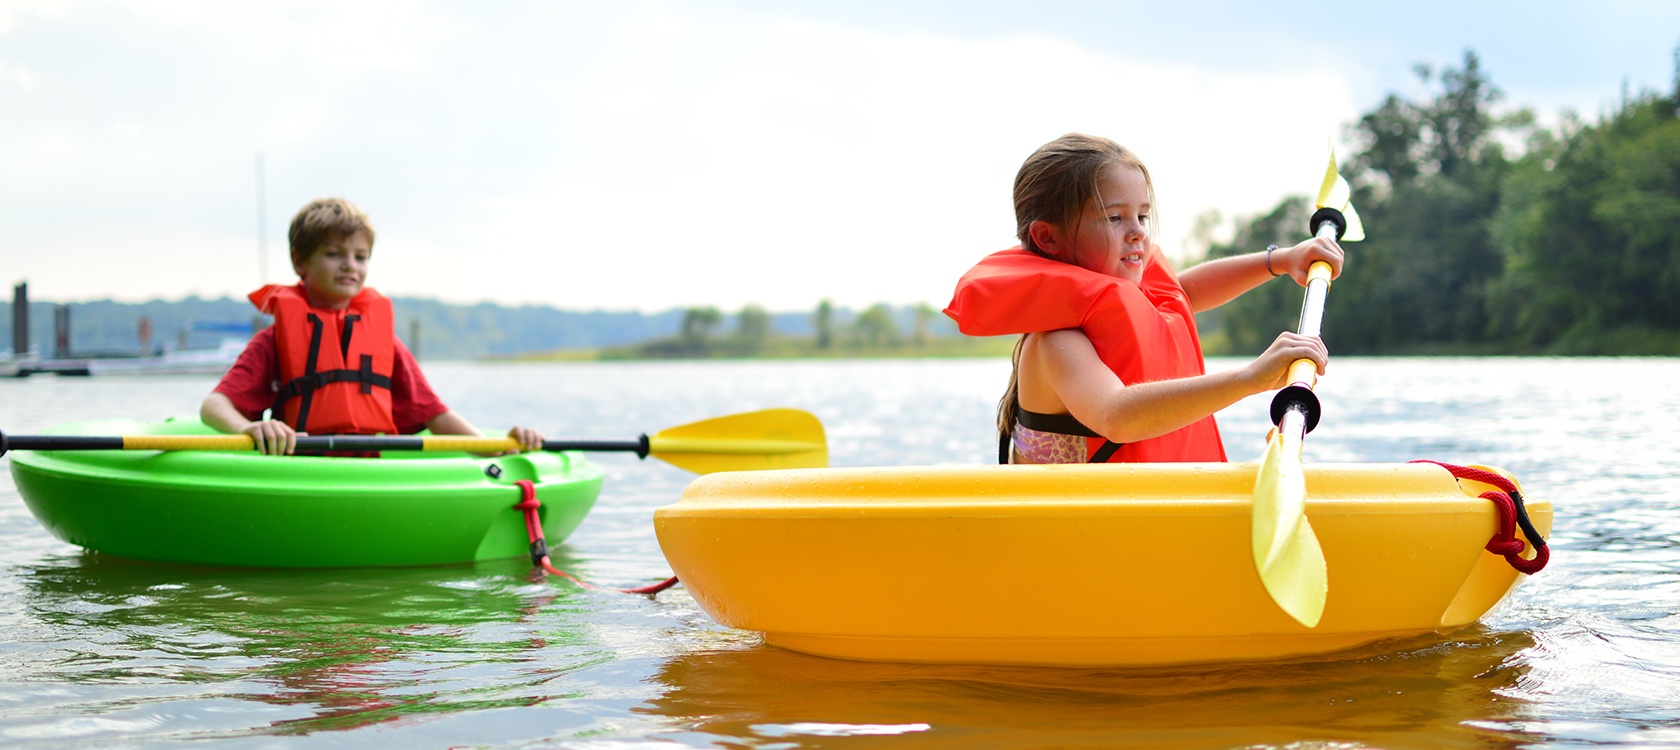 Kids in paddling boats